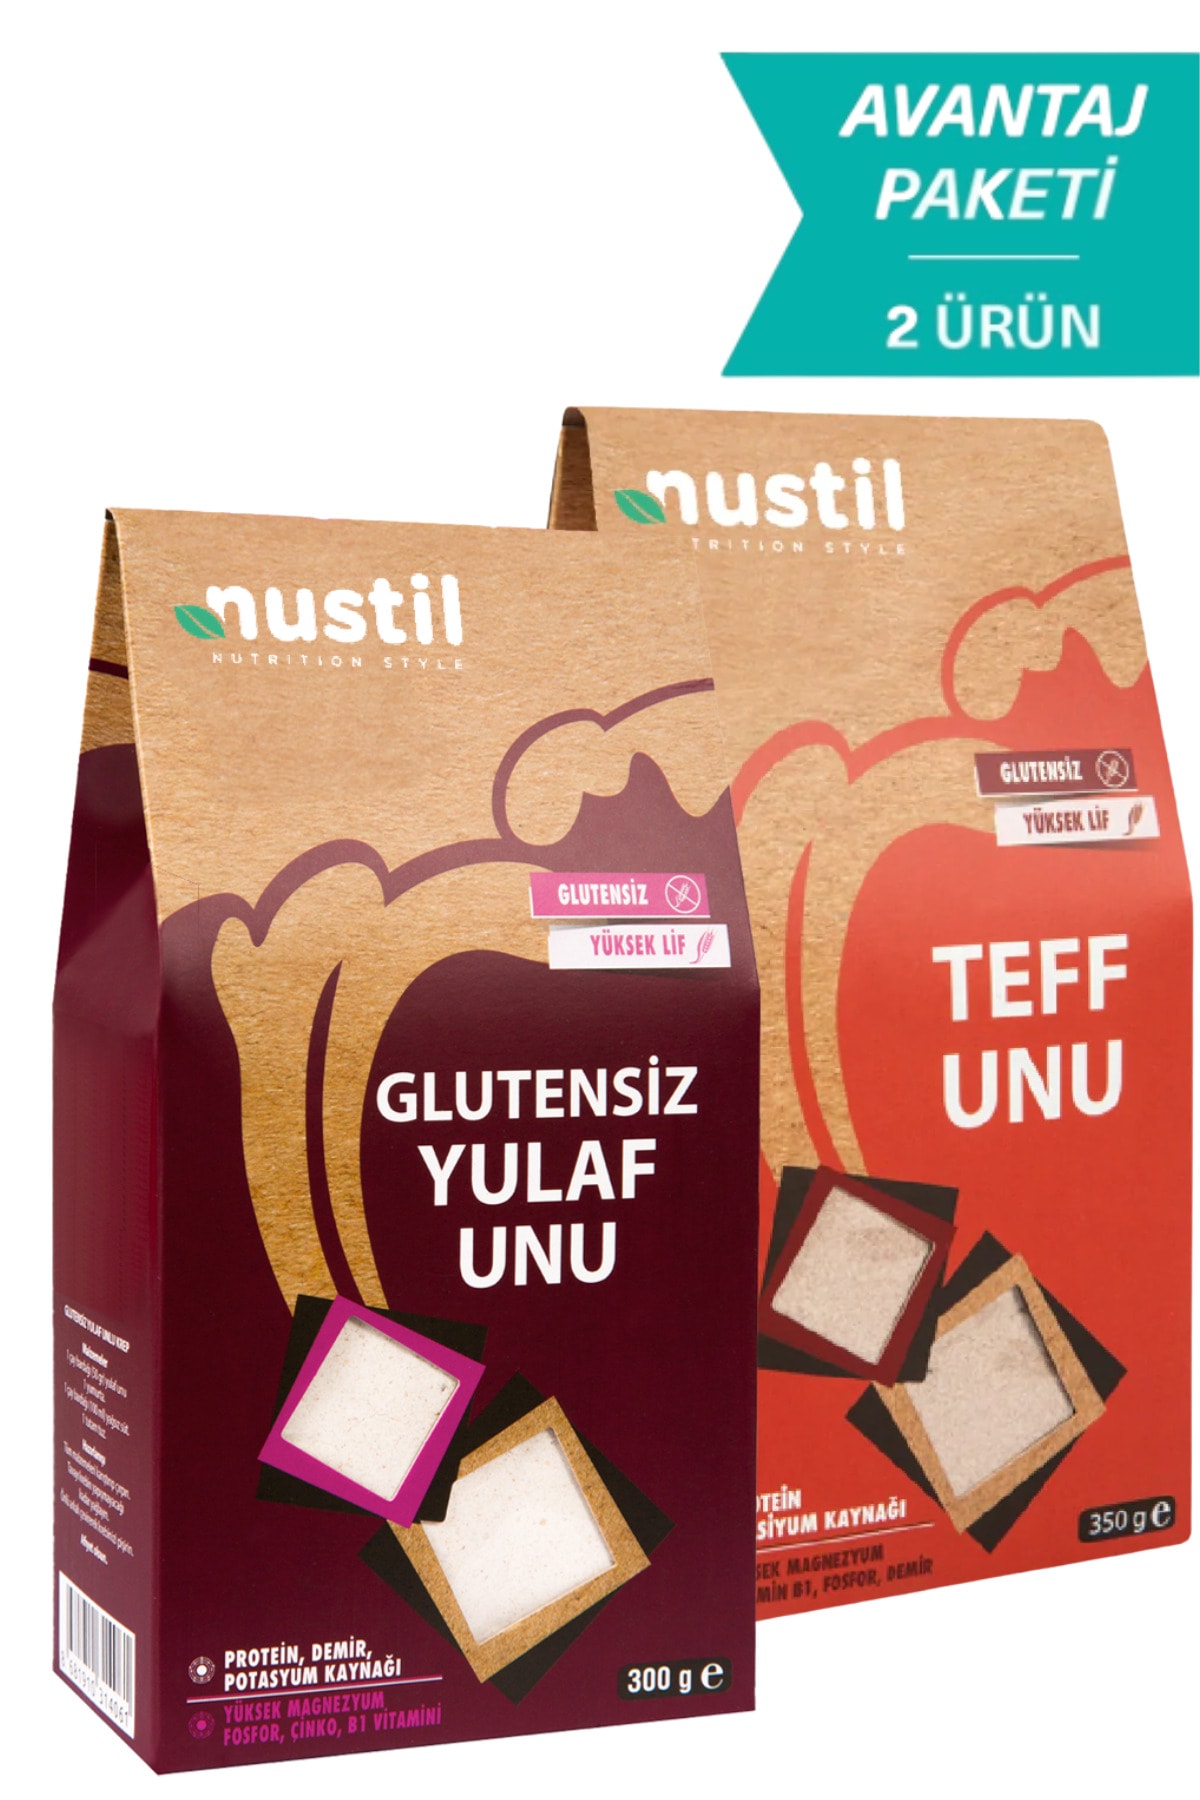 Nustil Nutrition Style Nustil Glutensiz Yulaf Unu + Teff Unu